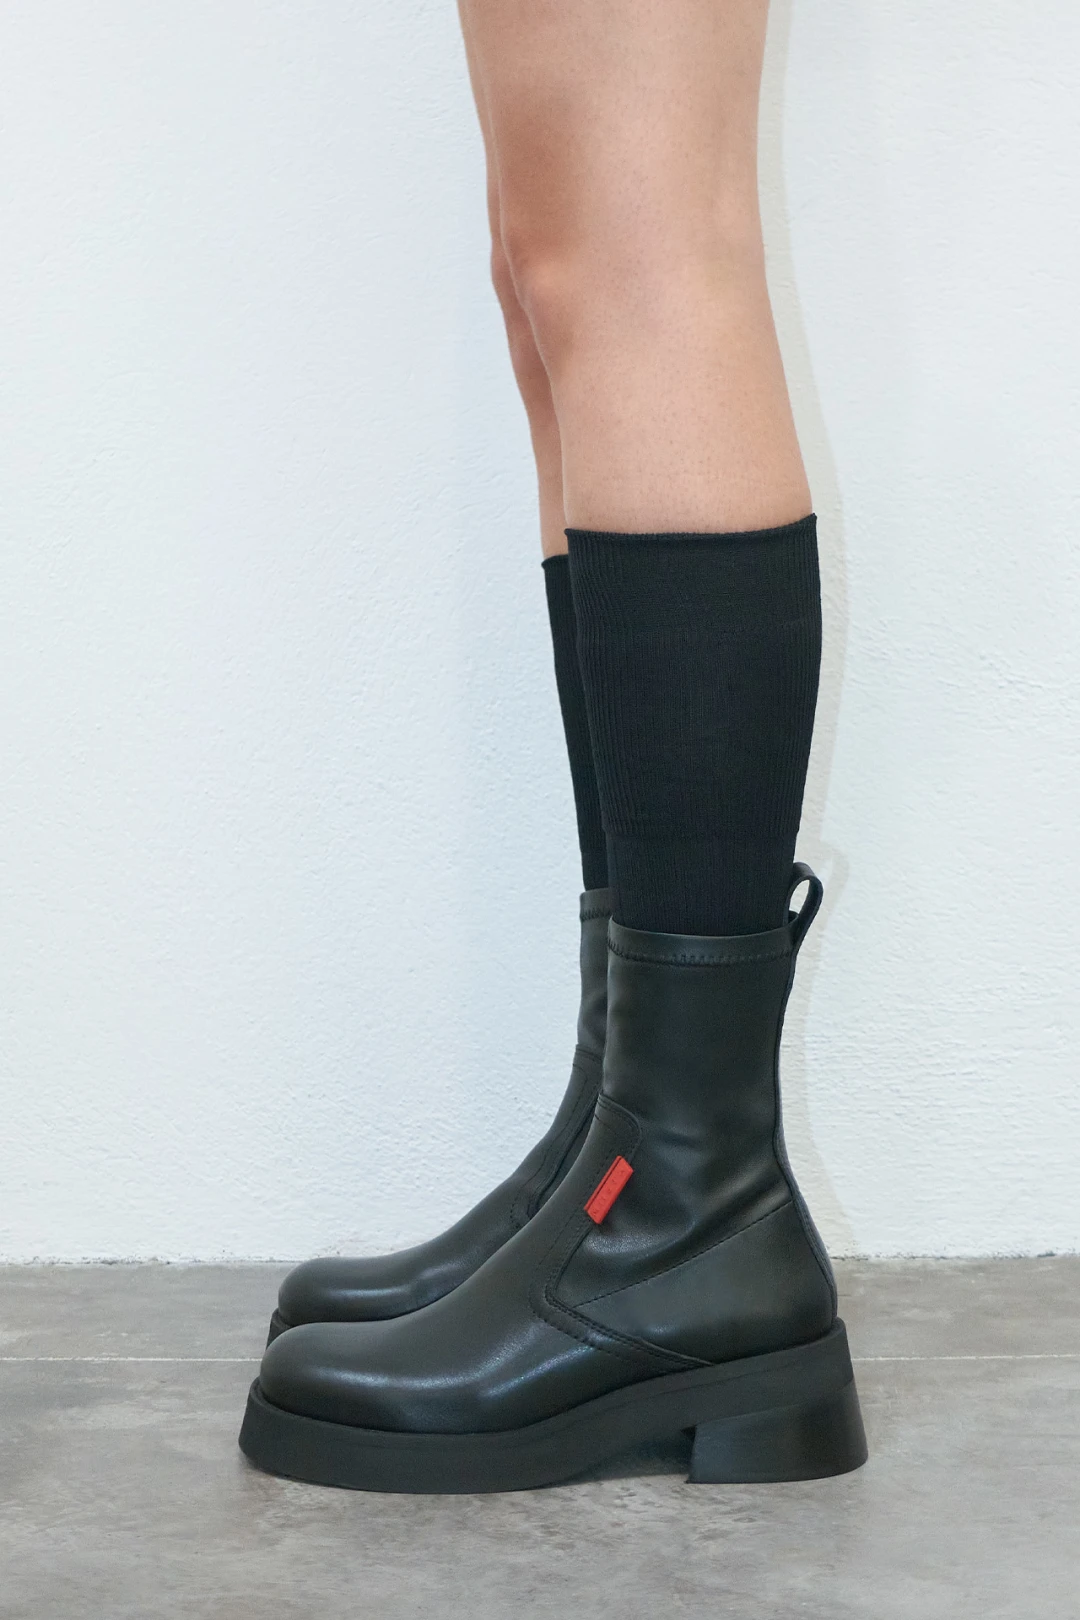 Oliana Black Boots | E8 by Miista Europe | Made in Europe